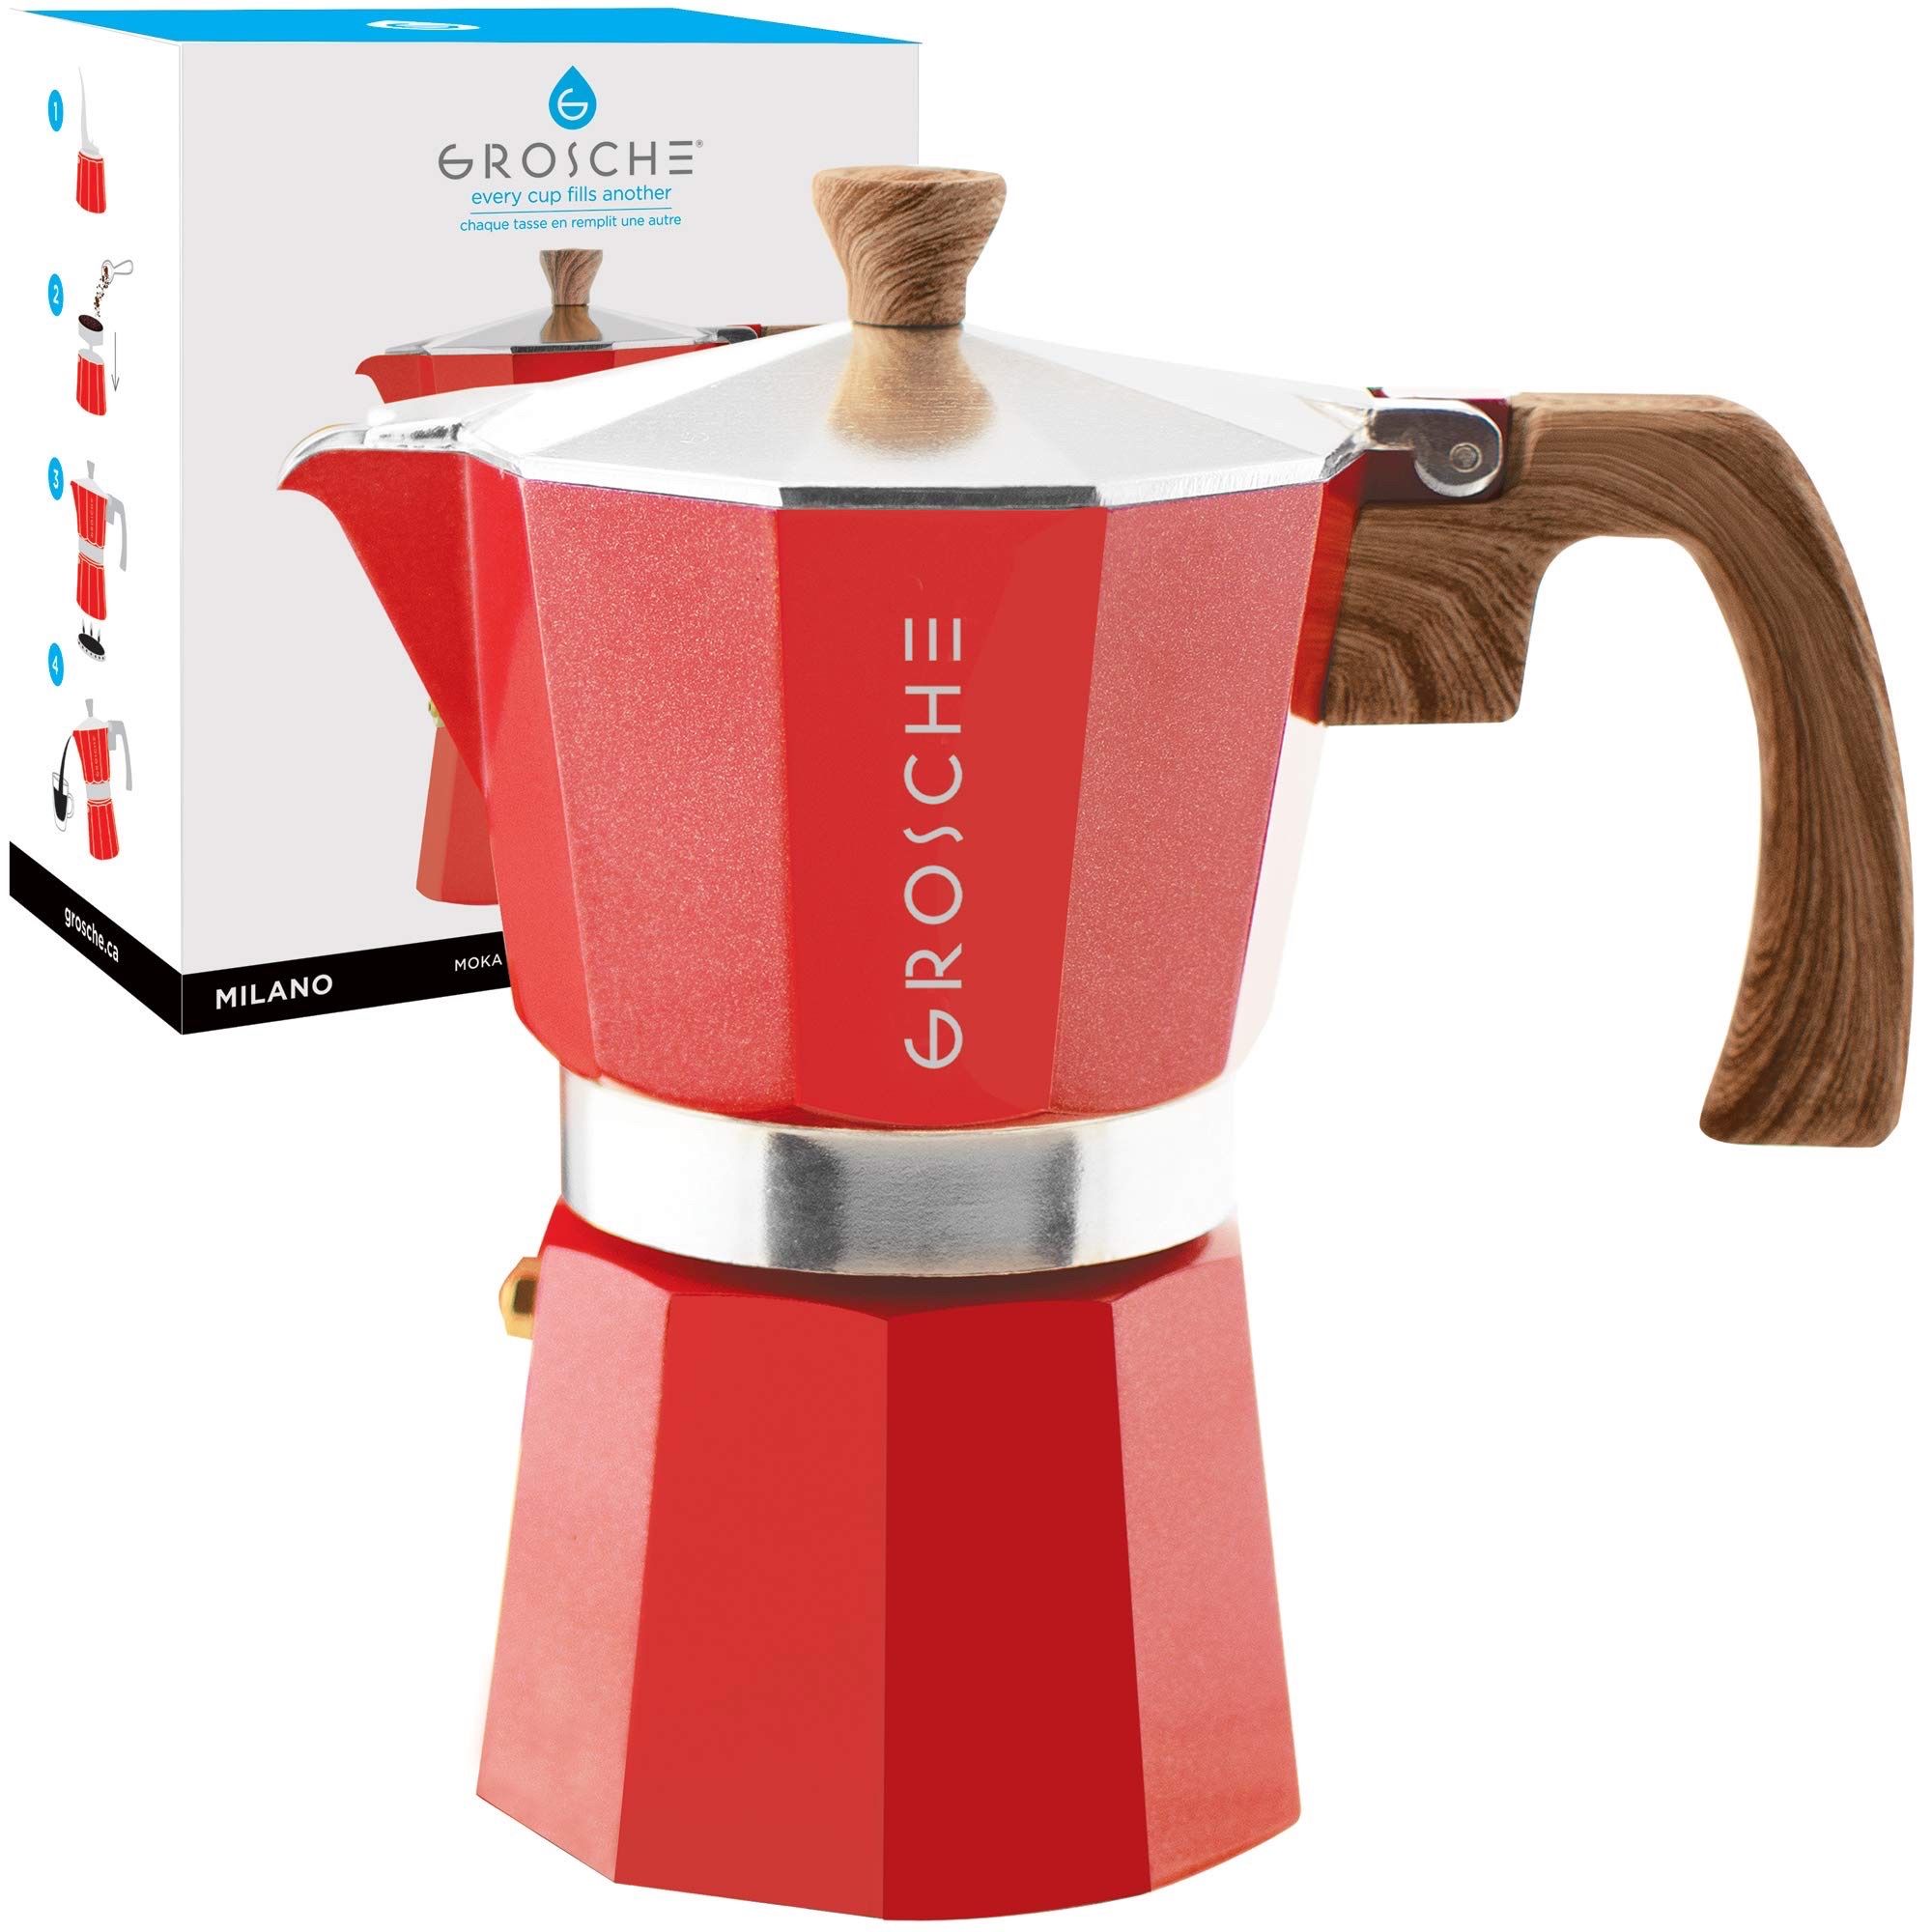 Milano Stovetop Espresso Maker Moka Pot 6 espresso Cup, 9.3 oz, Red - Cuban Coffee Maker Stove top coffee maker Moka Italian espresso greca coffee ma